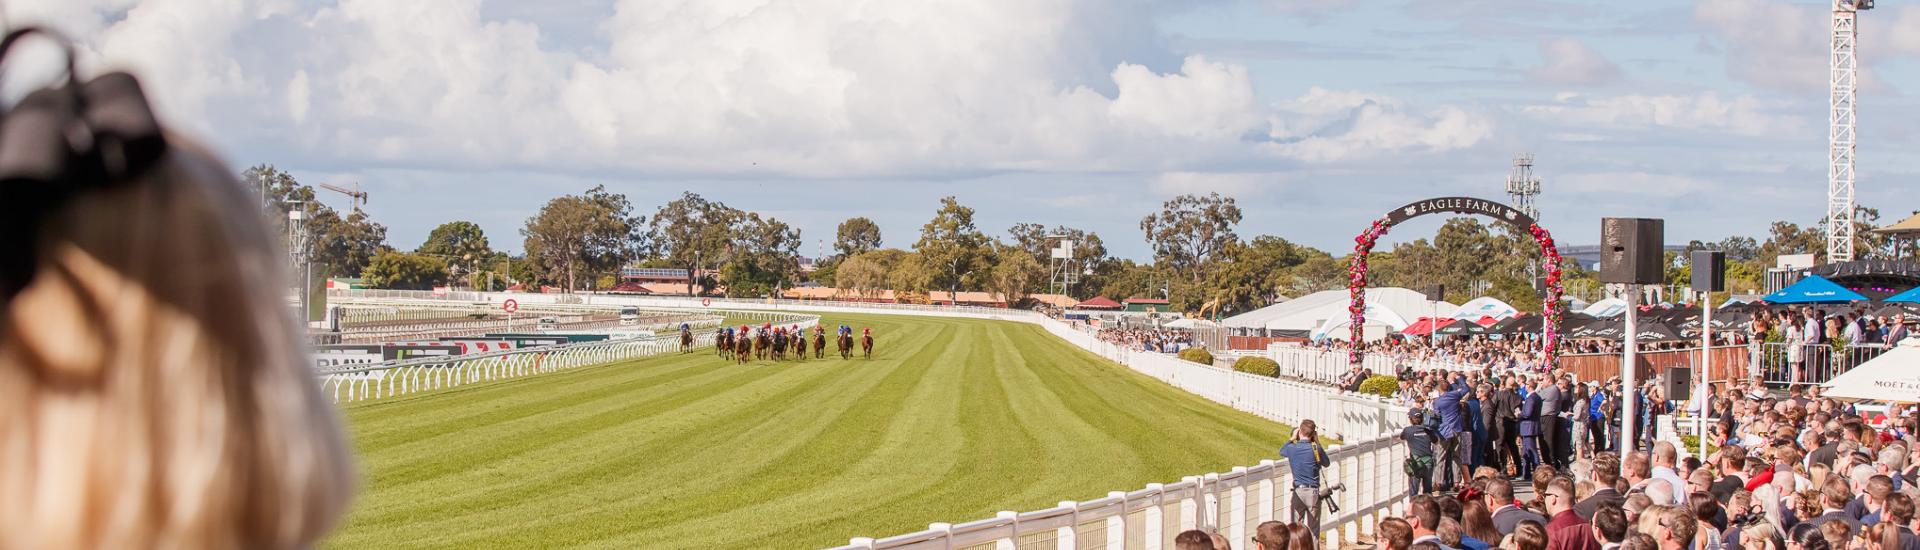 Racing Returns to Eagle Farm Racecourse | Brisbane Racing Club